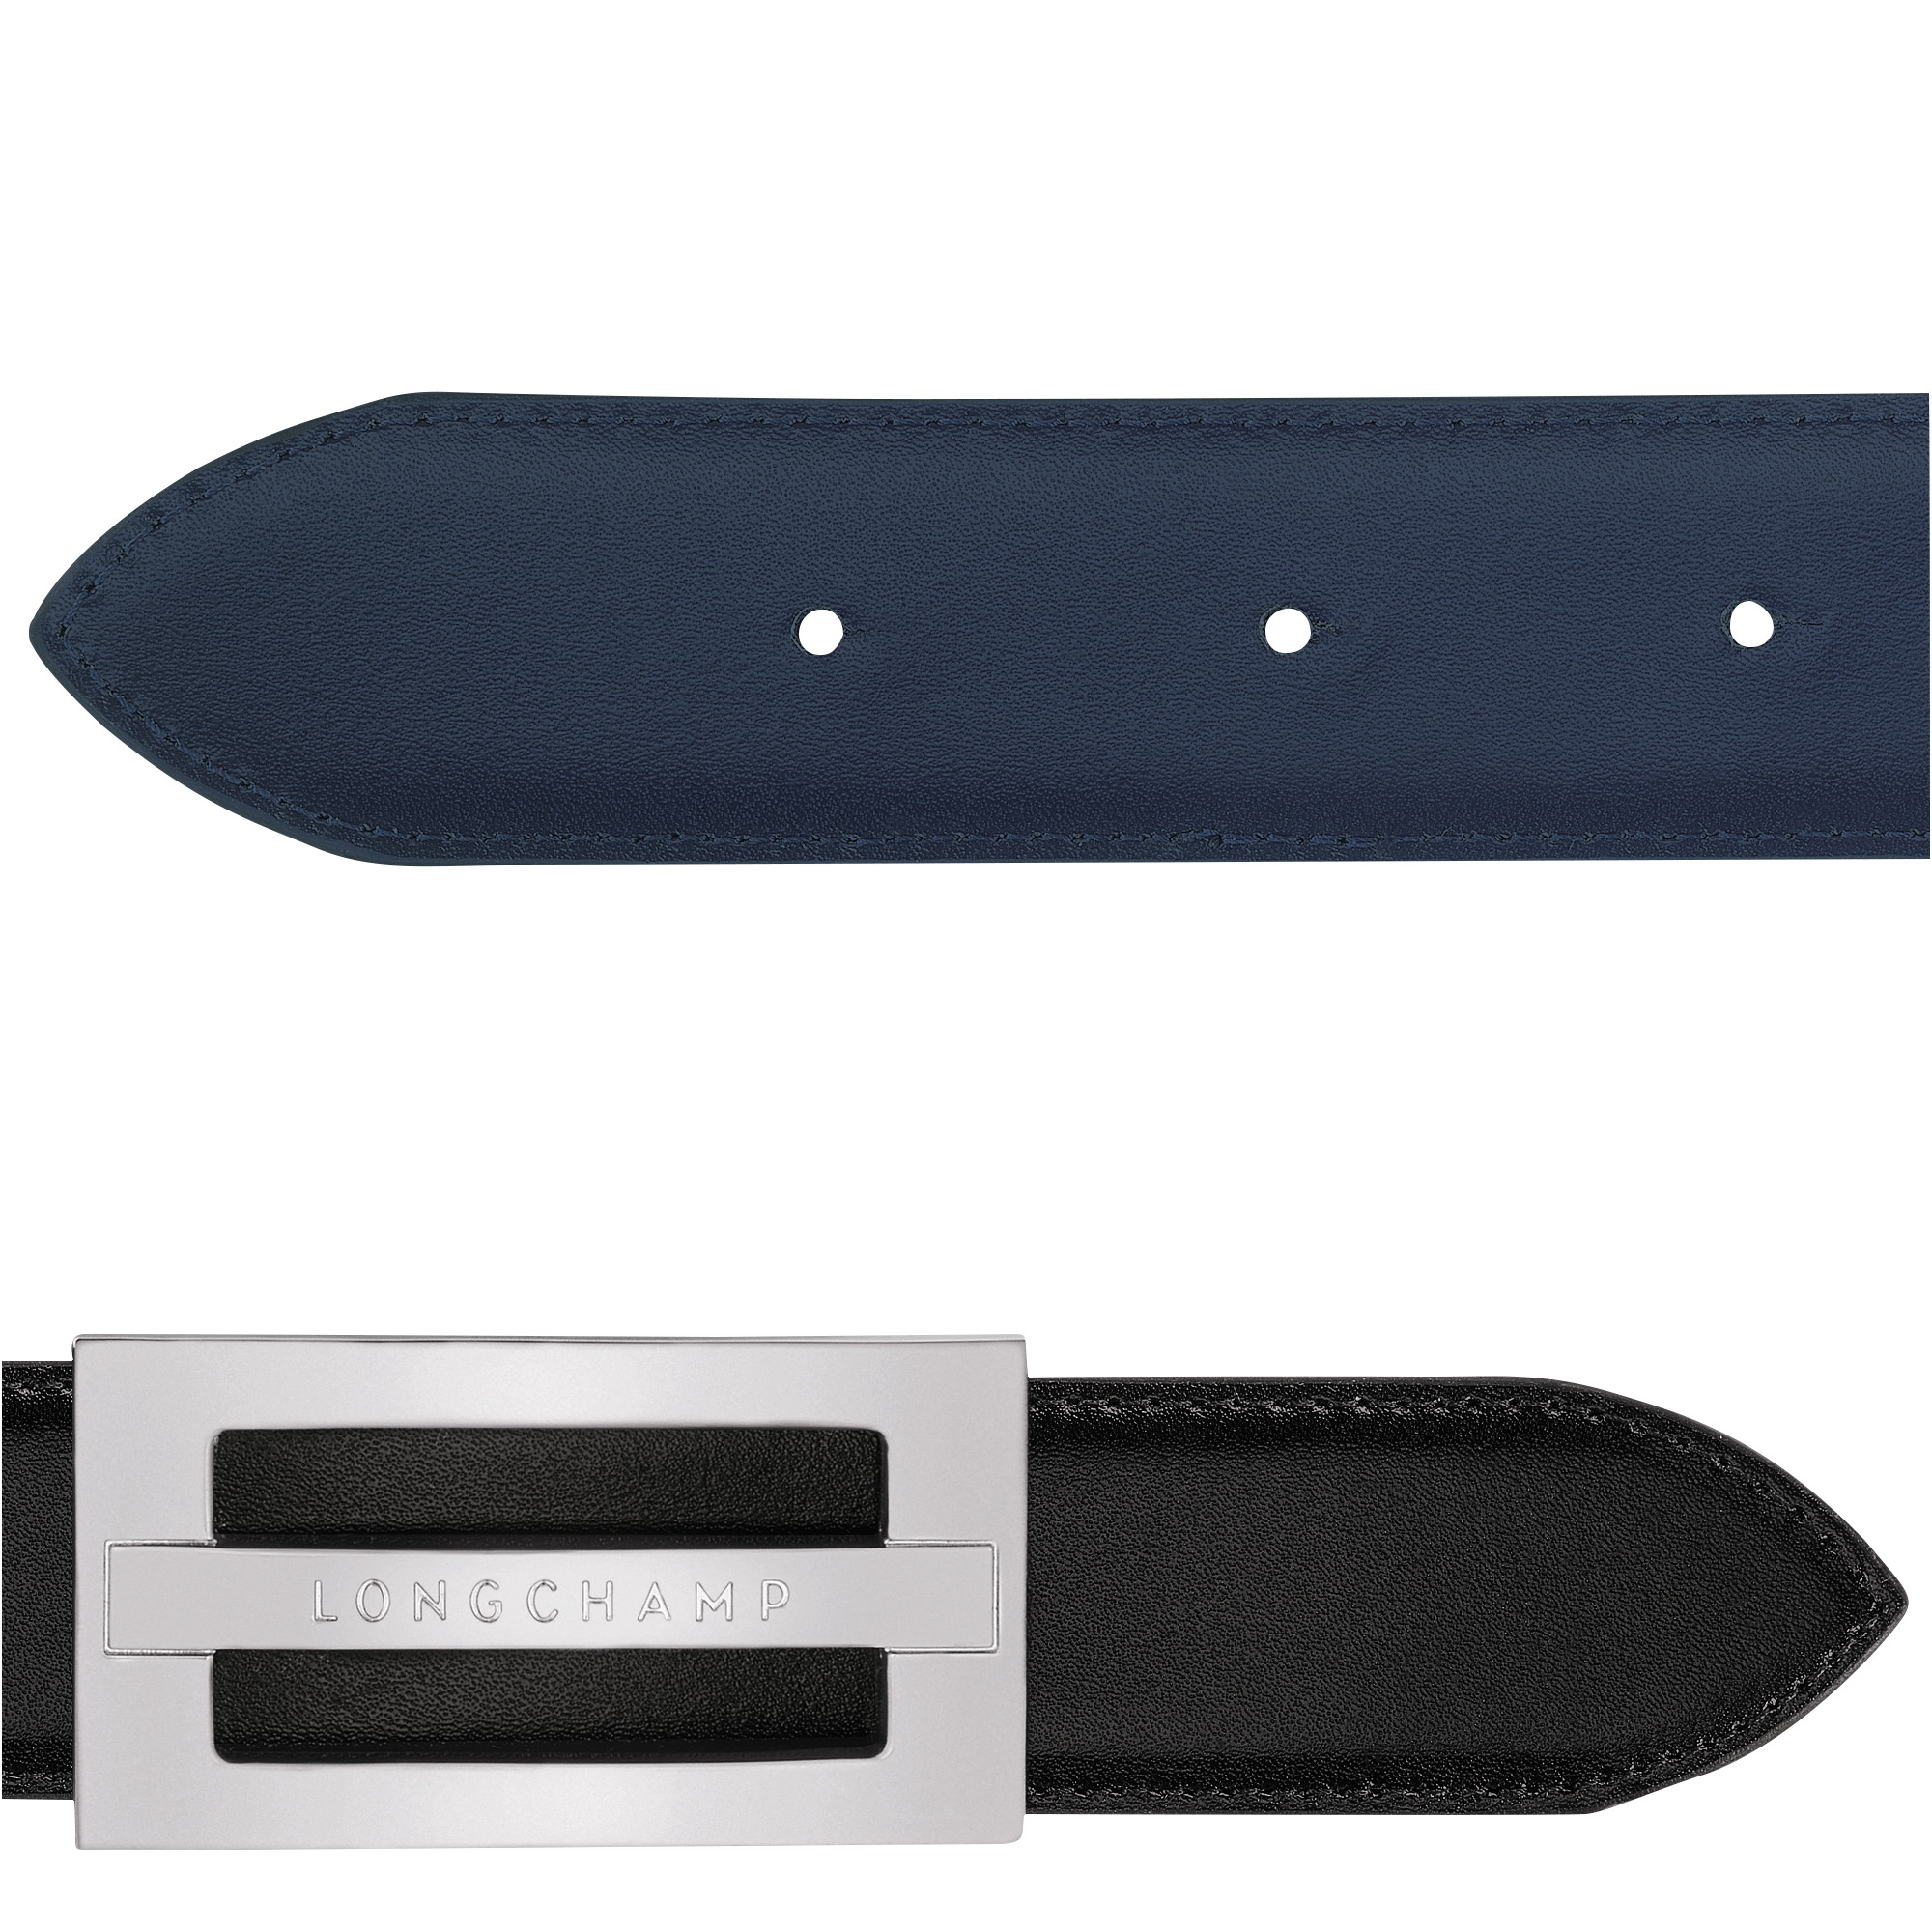 Delta Box Men's belt Black/Navy - Leather - 2